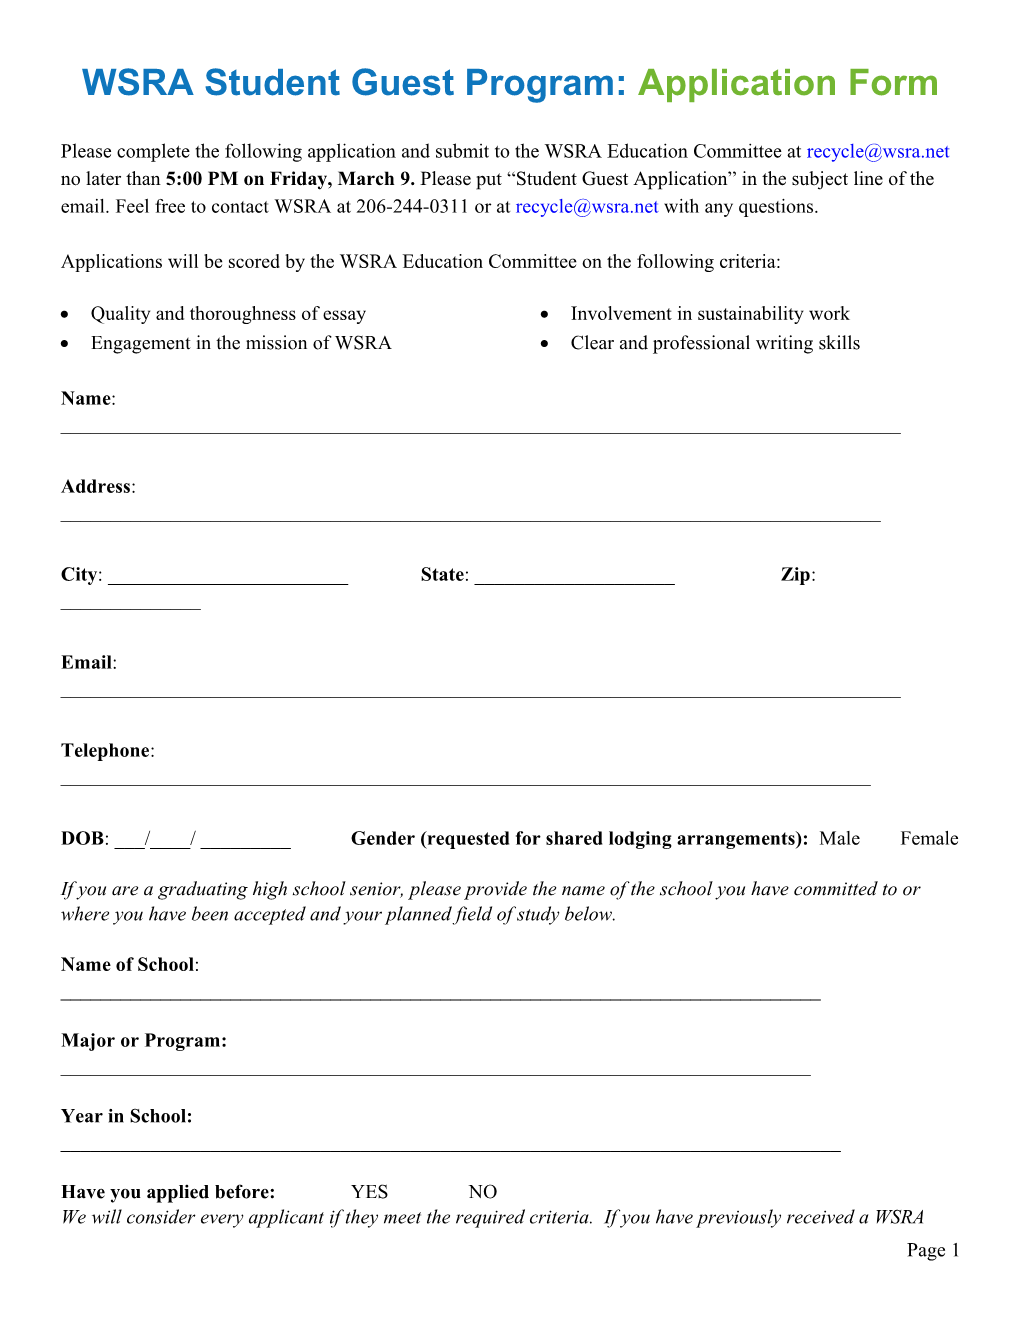 WSRA Student Guest Program: Application Form